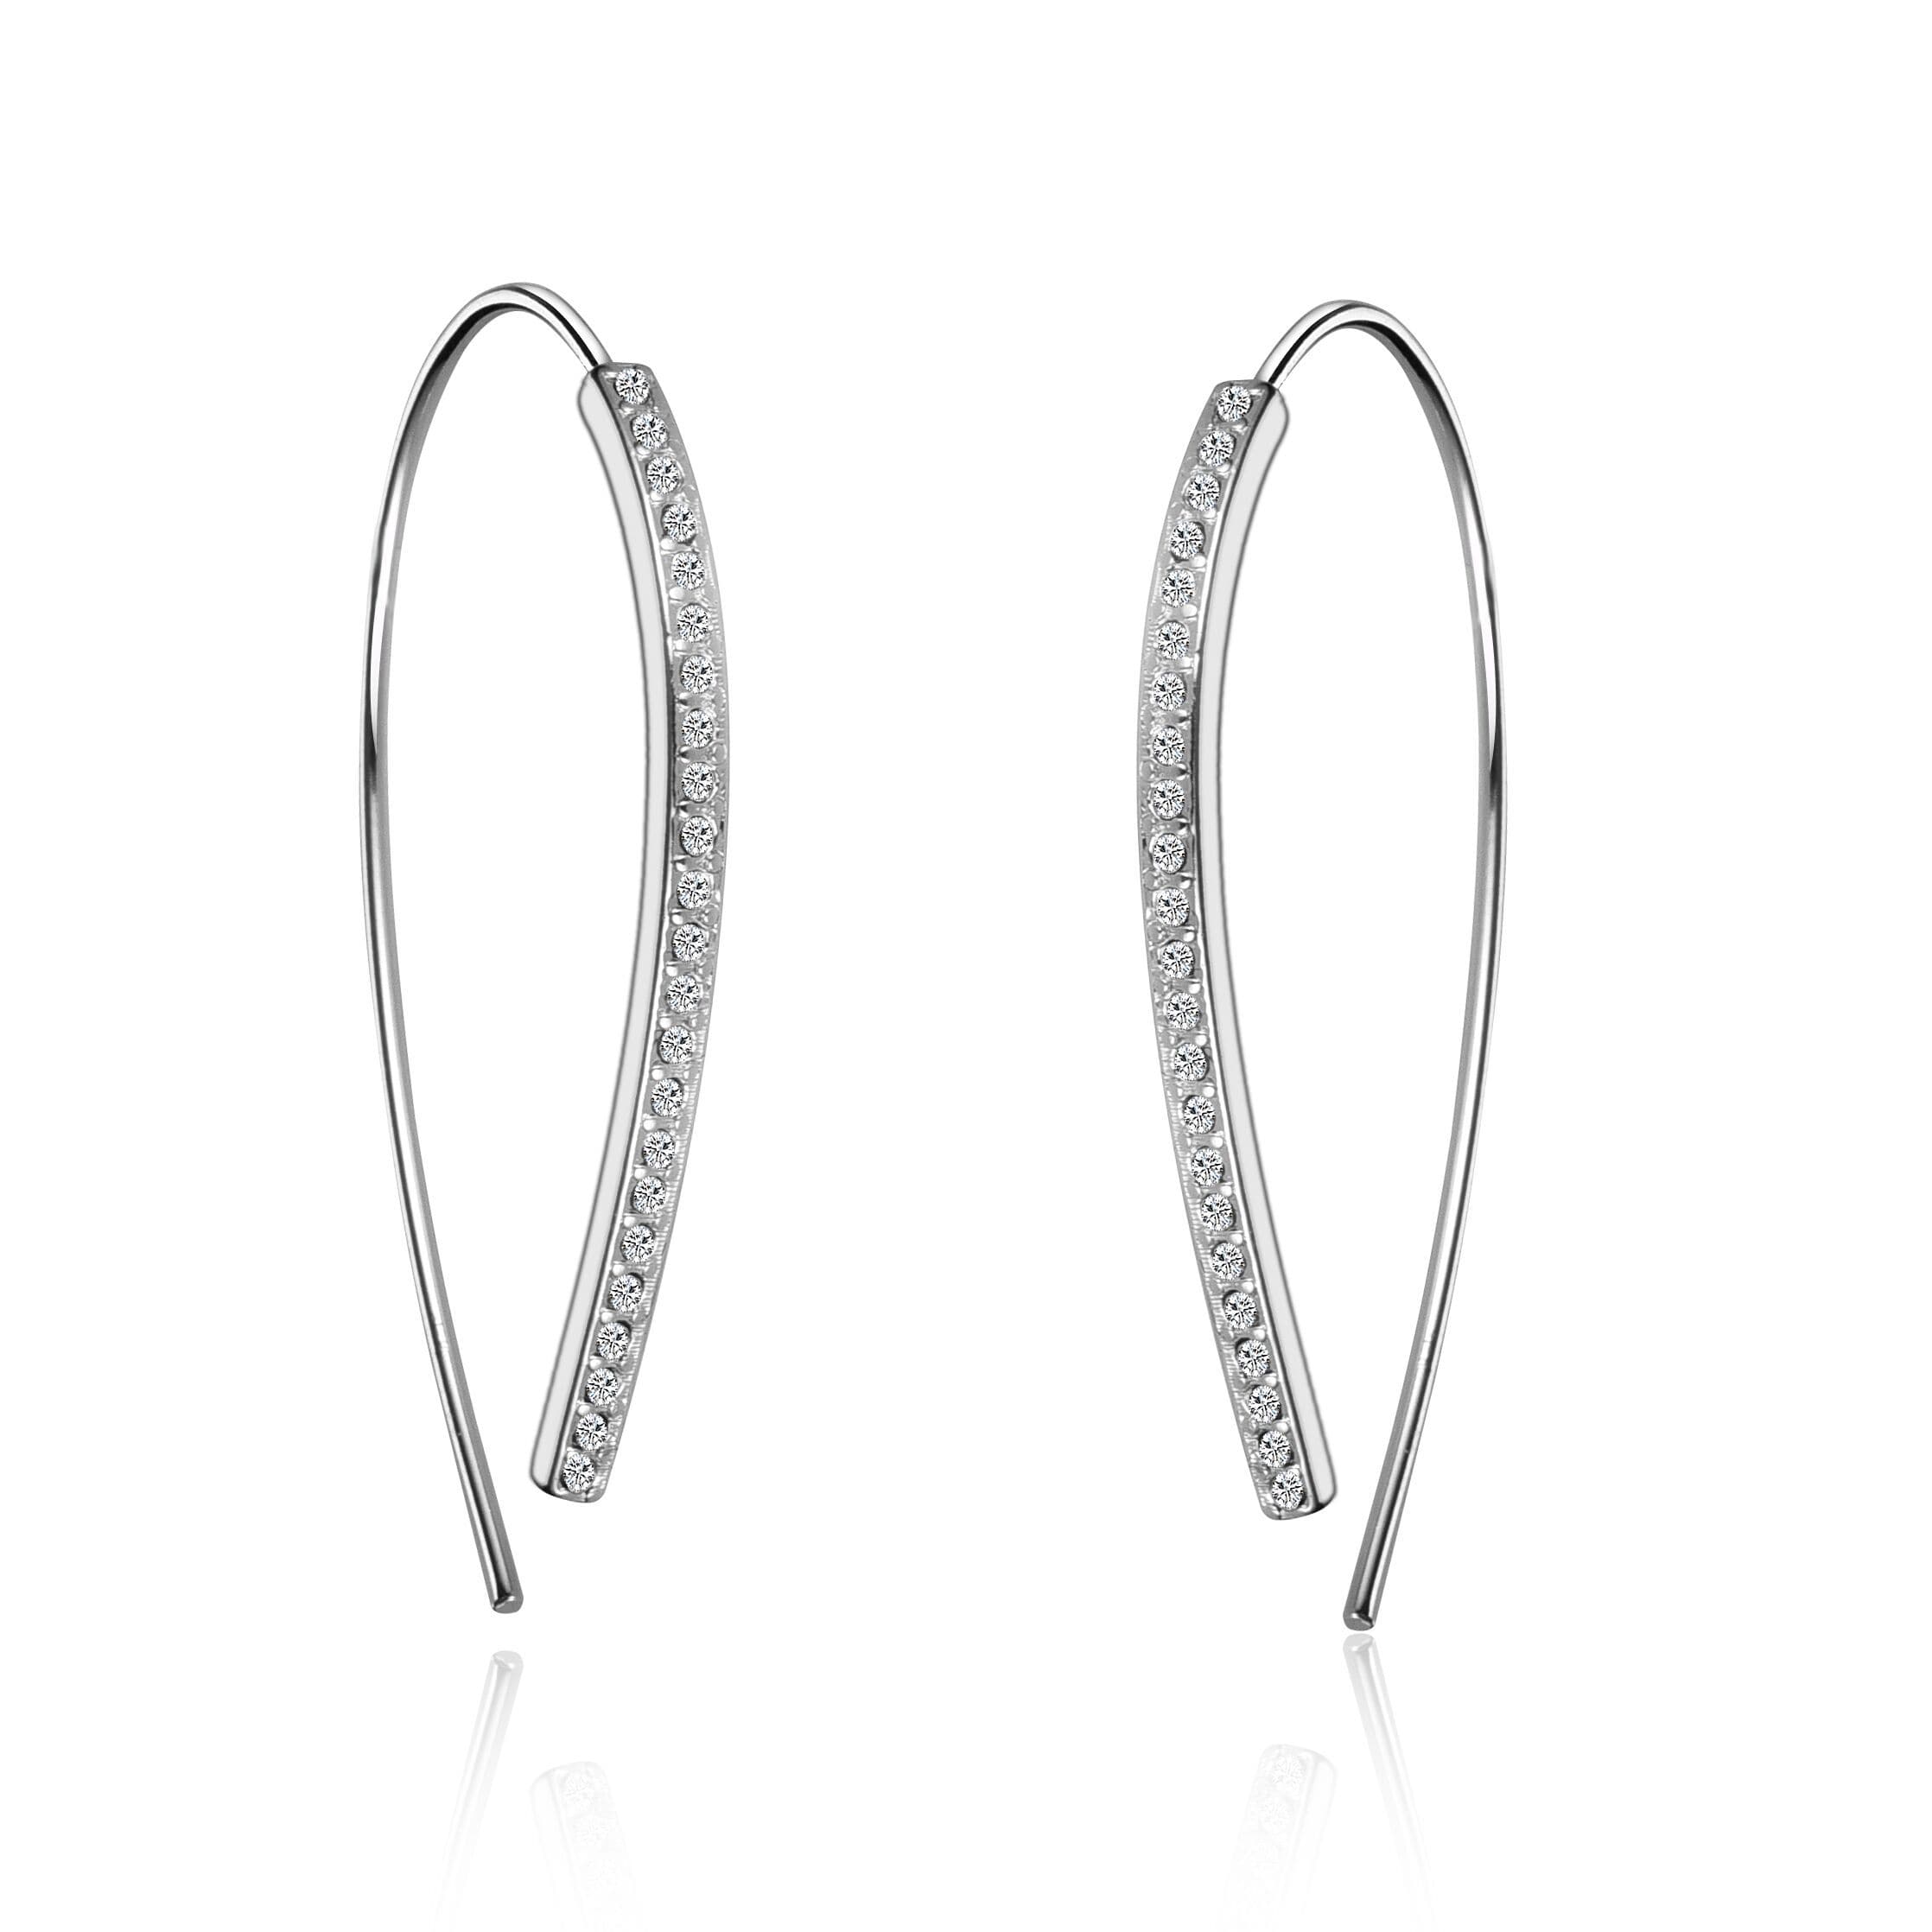 Thread Earrings Created with Zircondia® Crystals by Philip Jones Jewellery